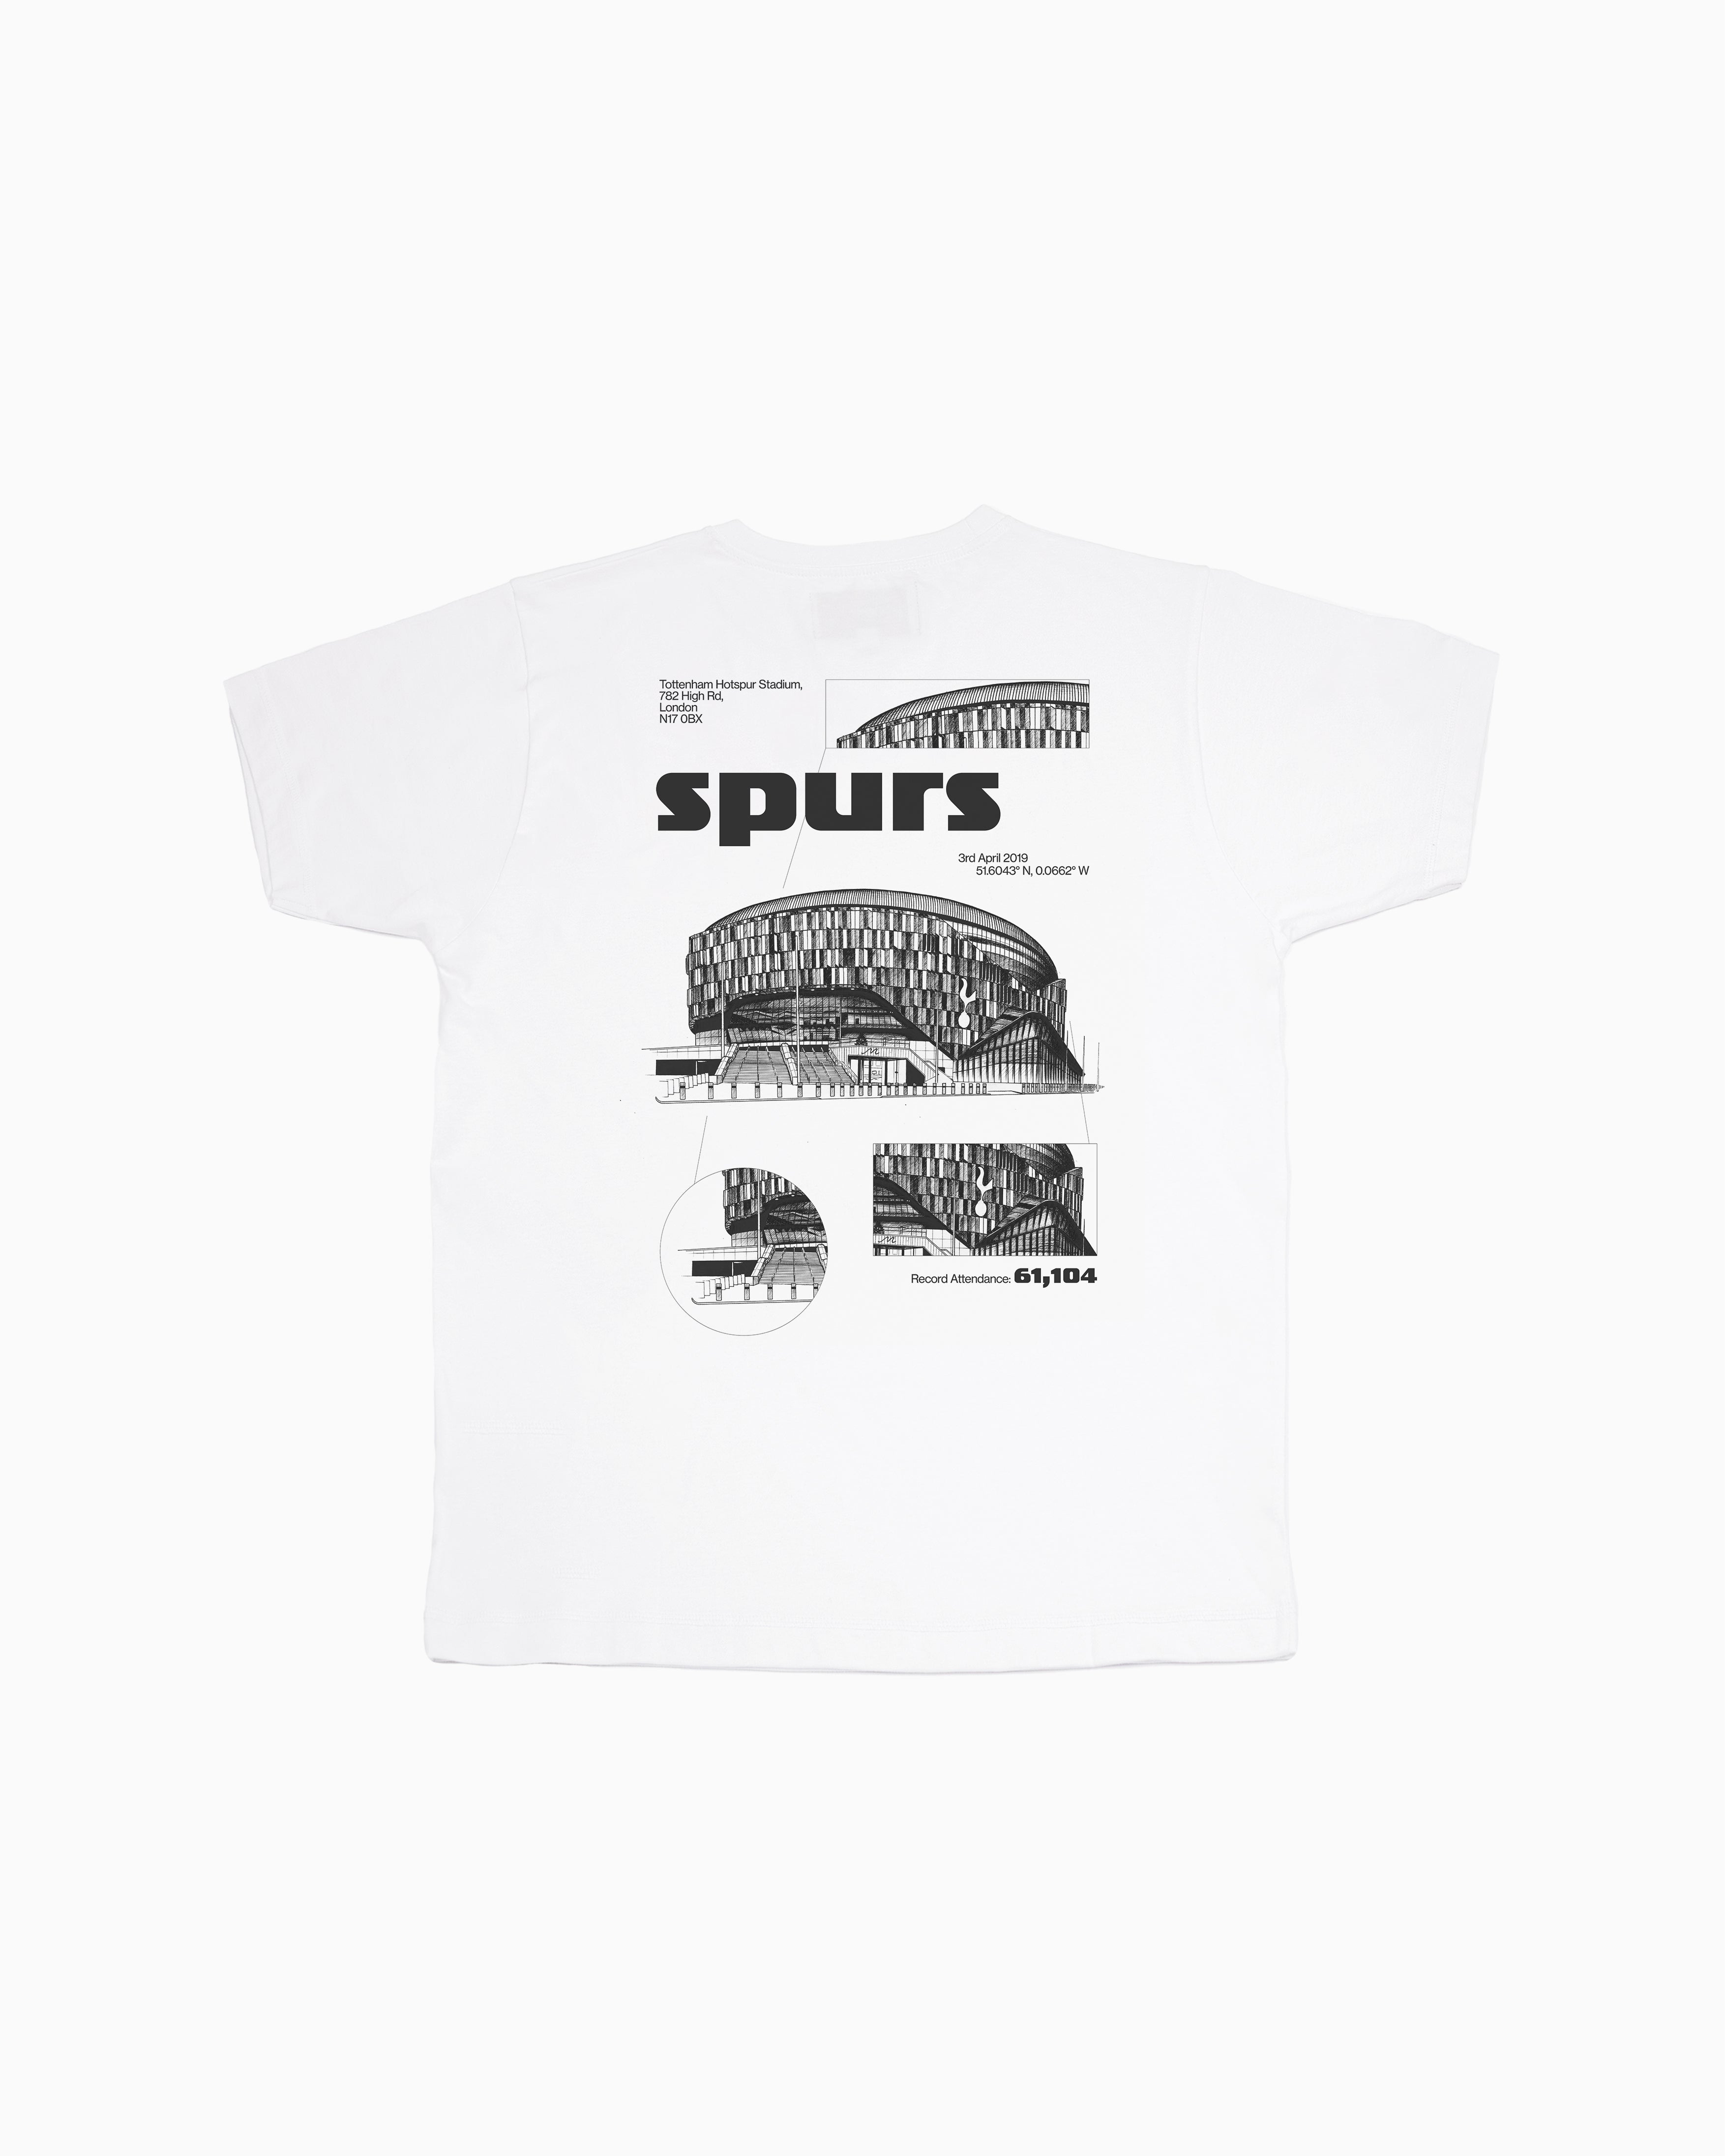 Spurs Stadium Blueprint - Tee or Sweat